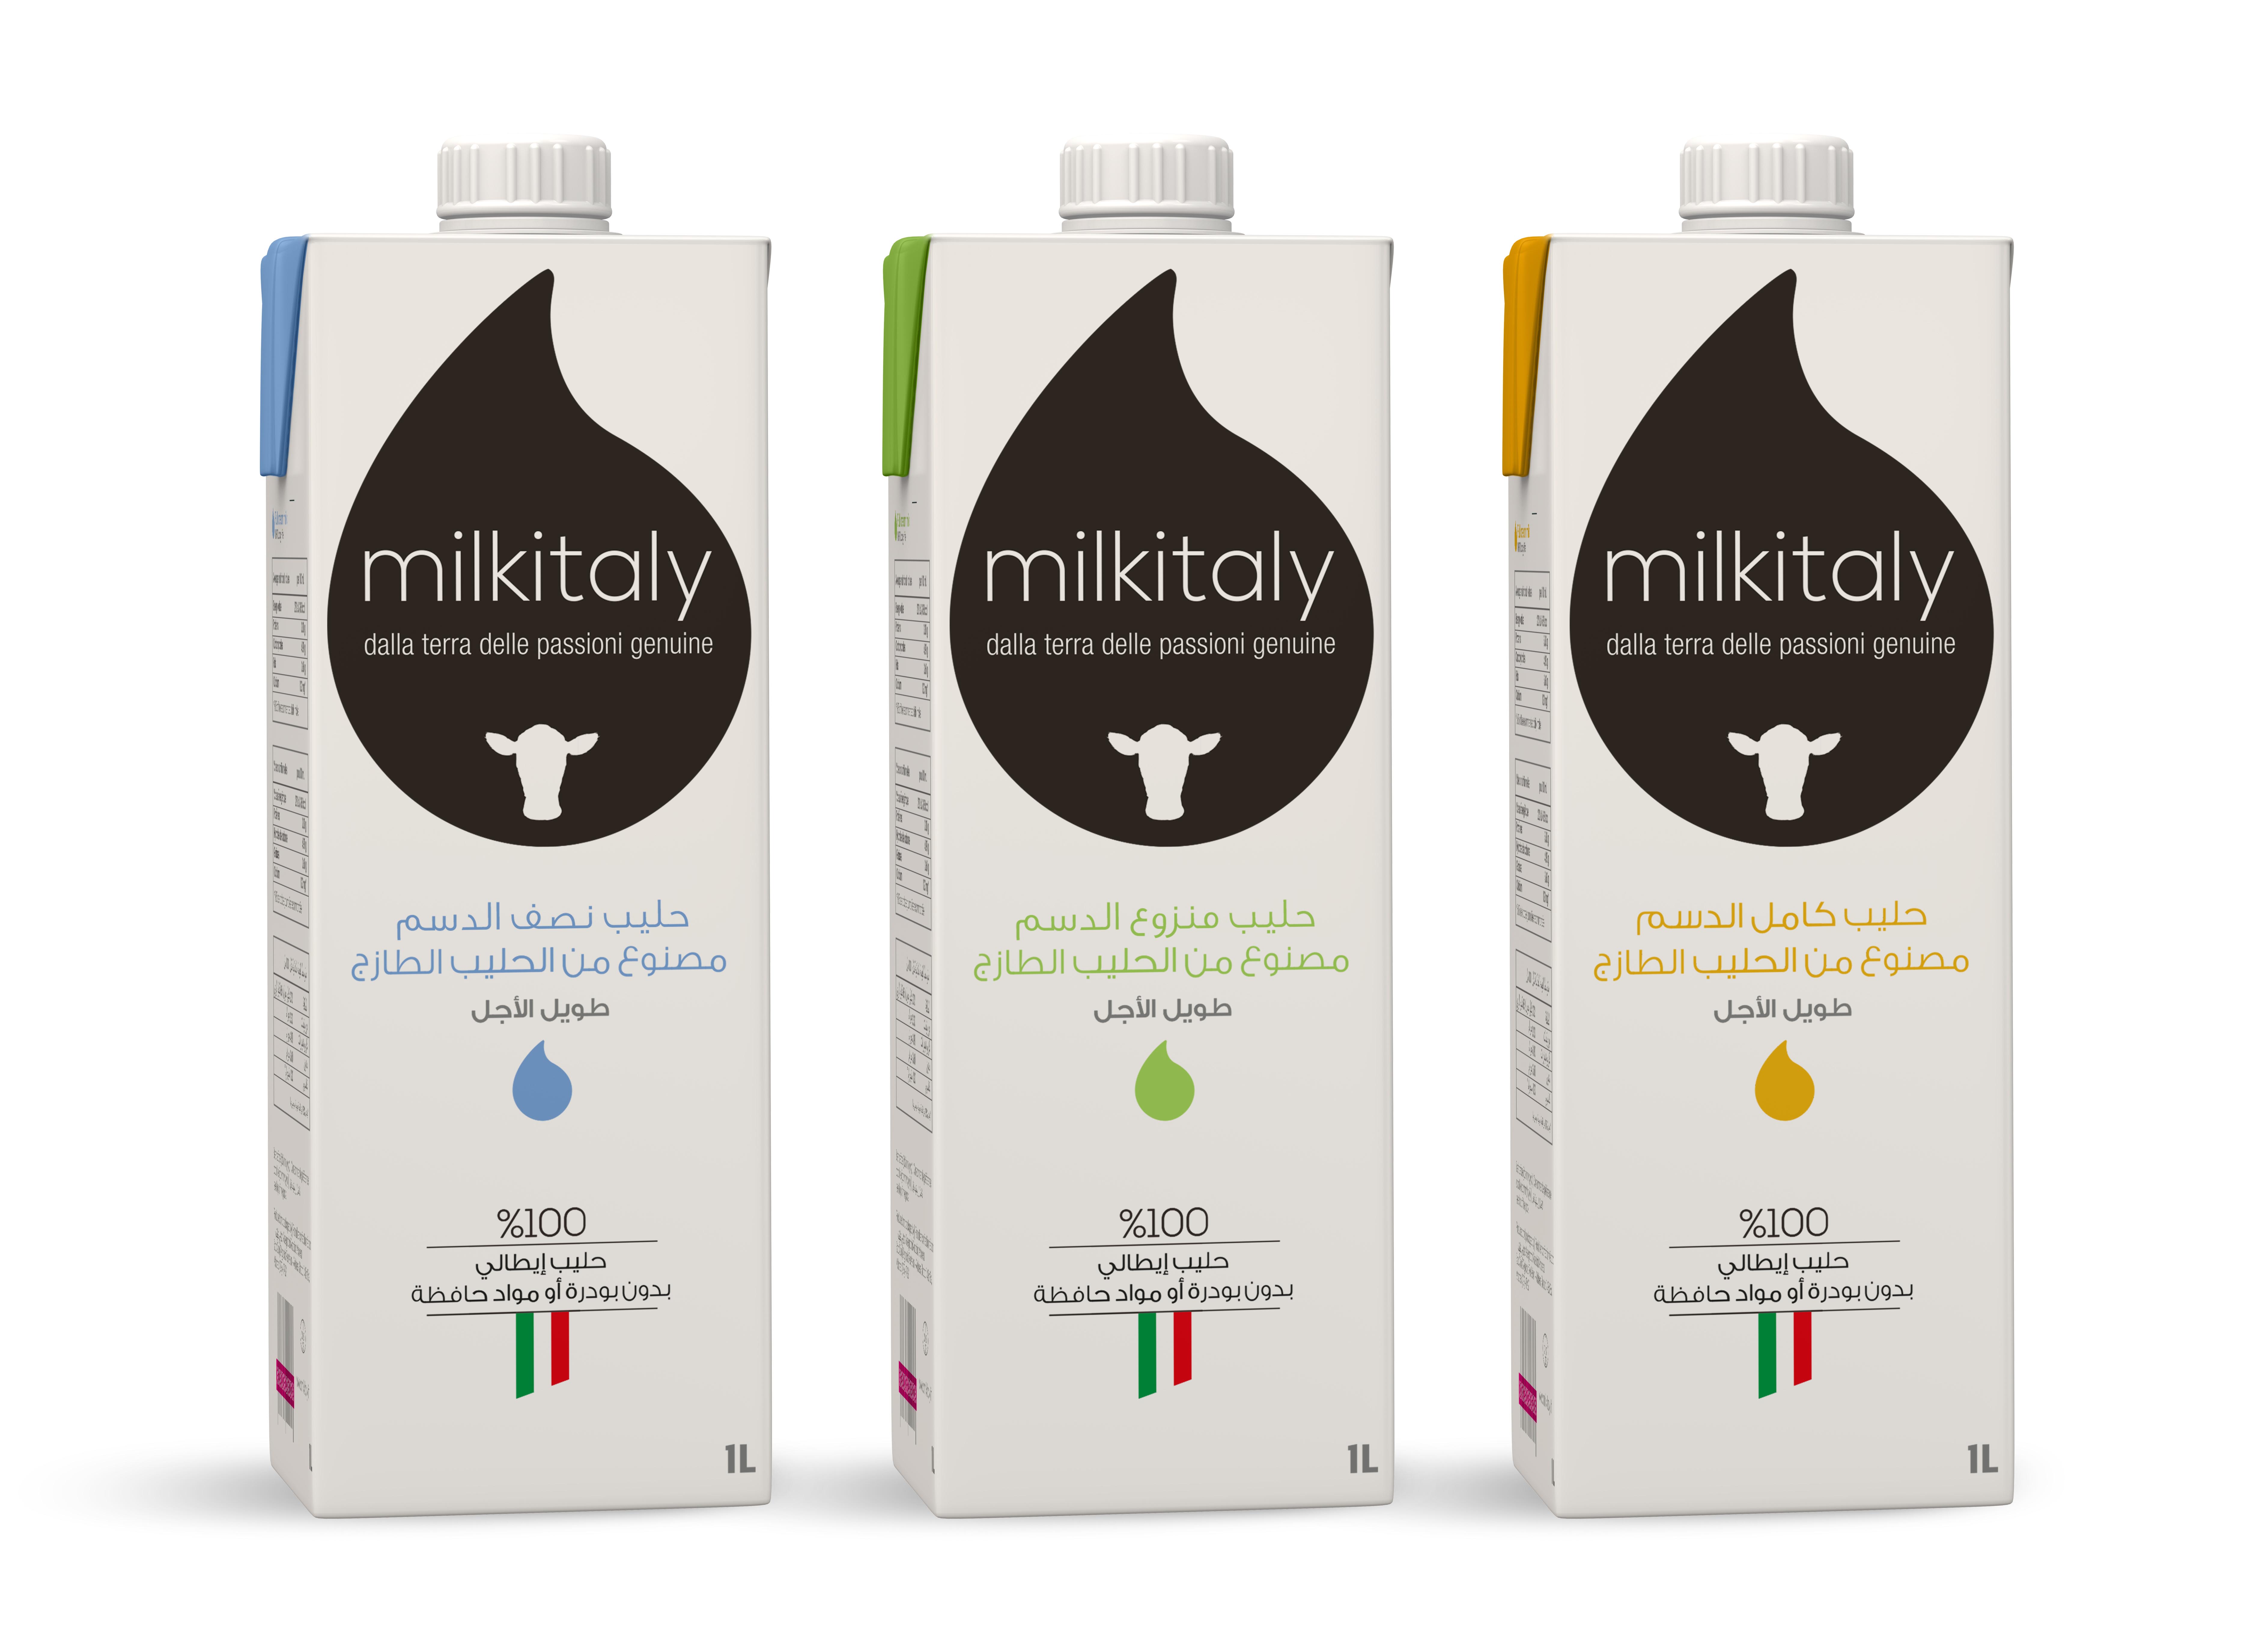 1L_Milk_Italy